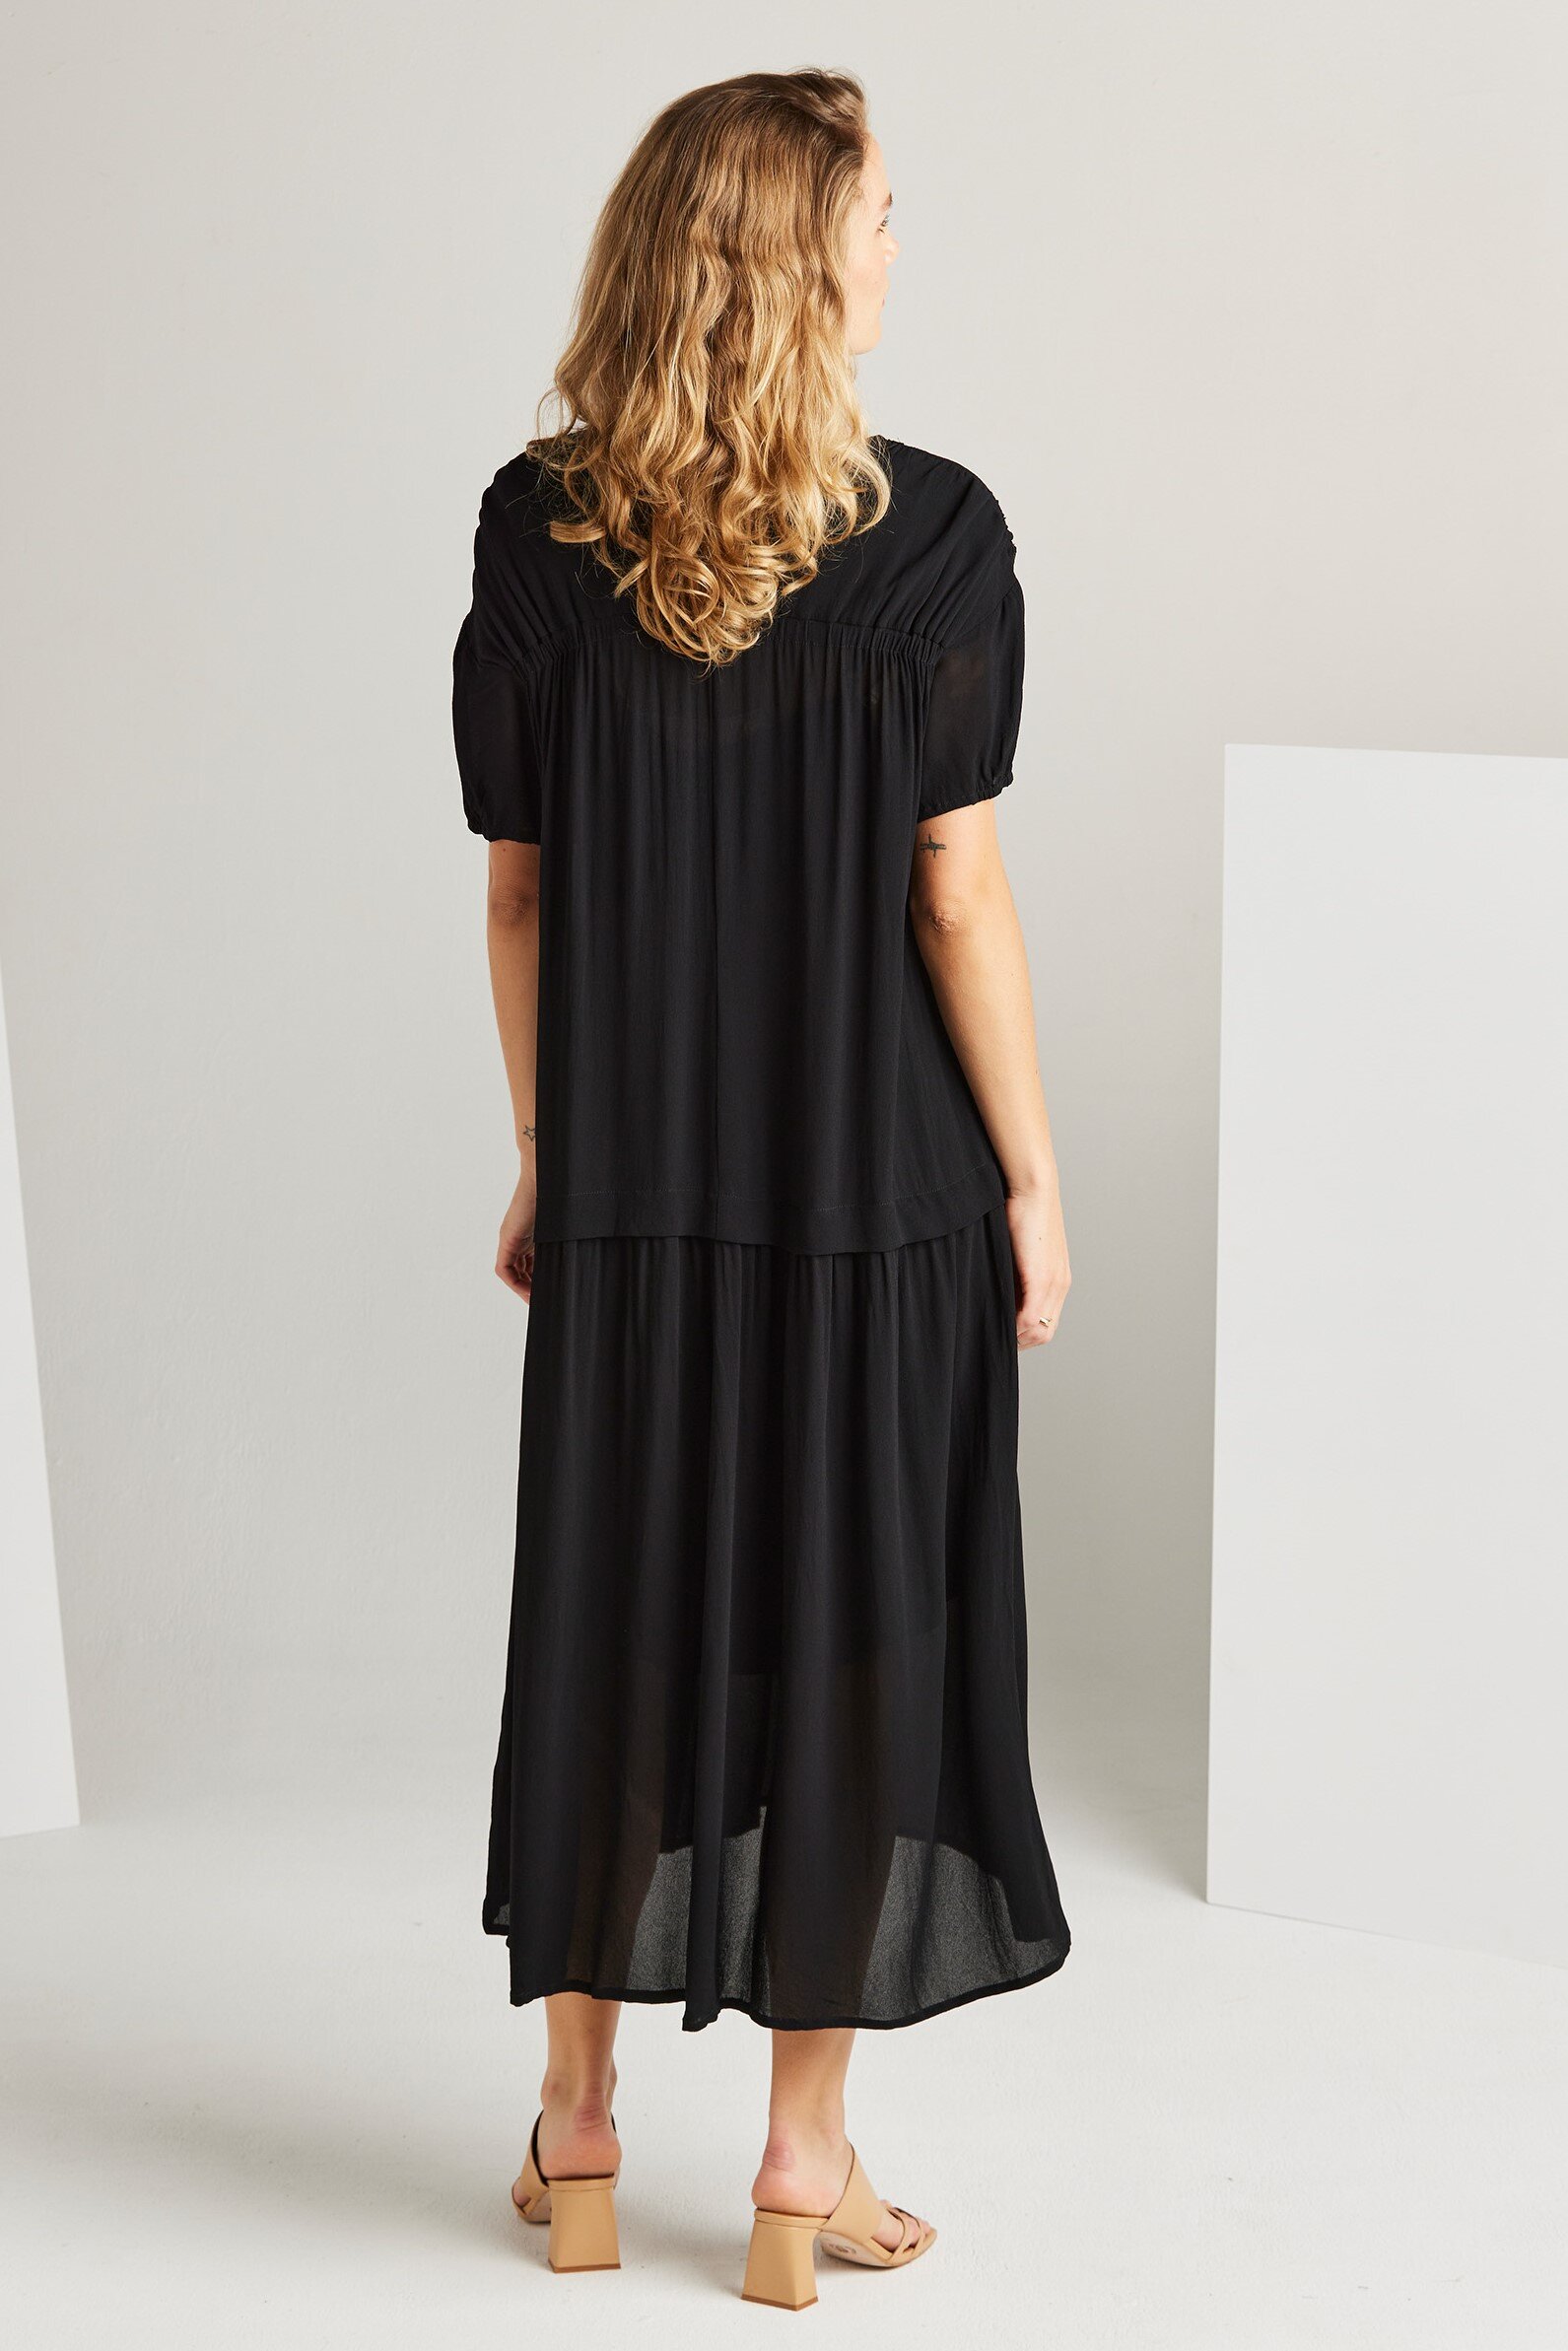 Marlton Dress (Black) - Labels-Lania : Just Looking - Lania S23